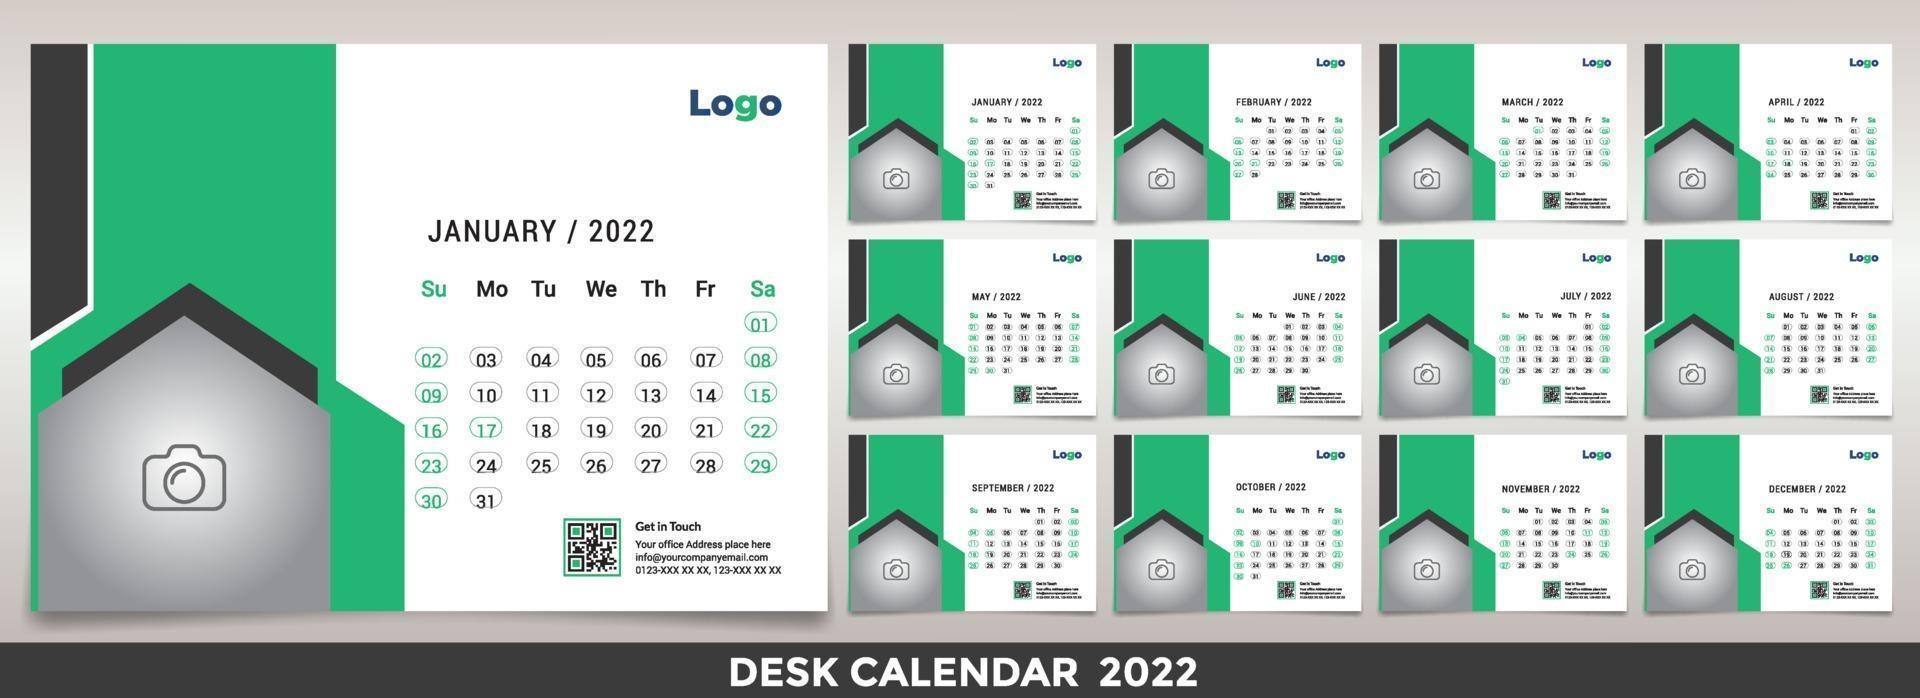 Free Desk Calendar 2022 Template Design Idea, Calendar 2022, 2023 vector